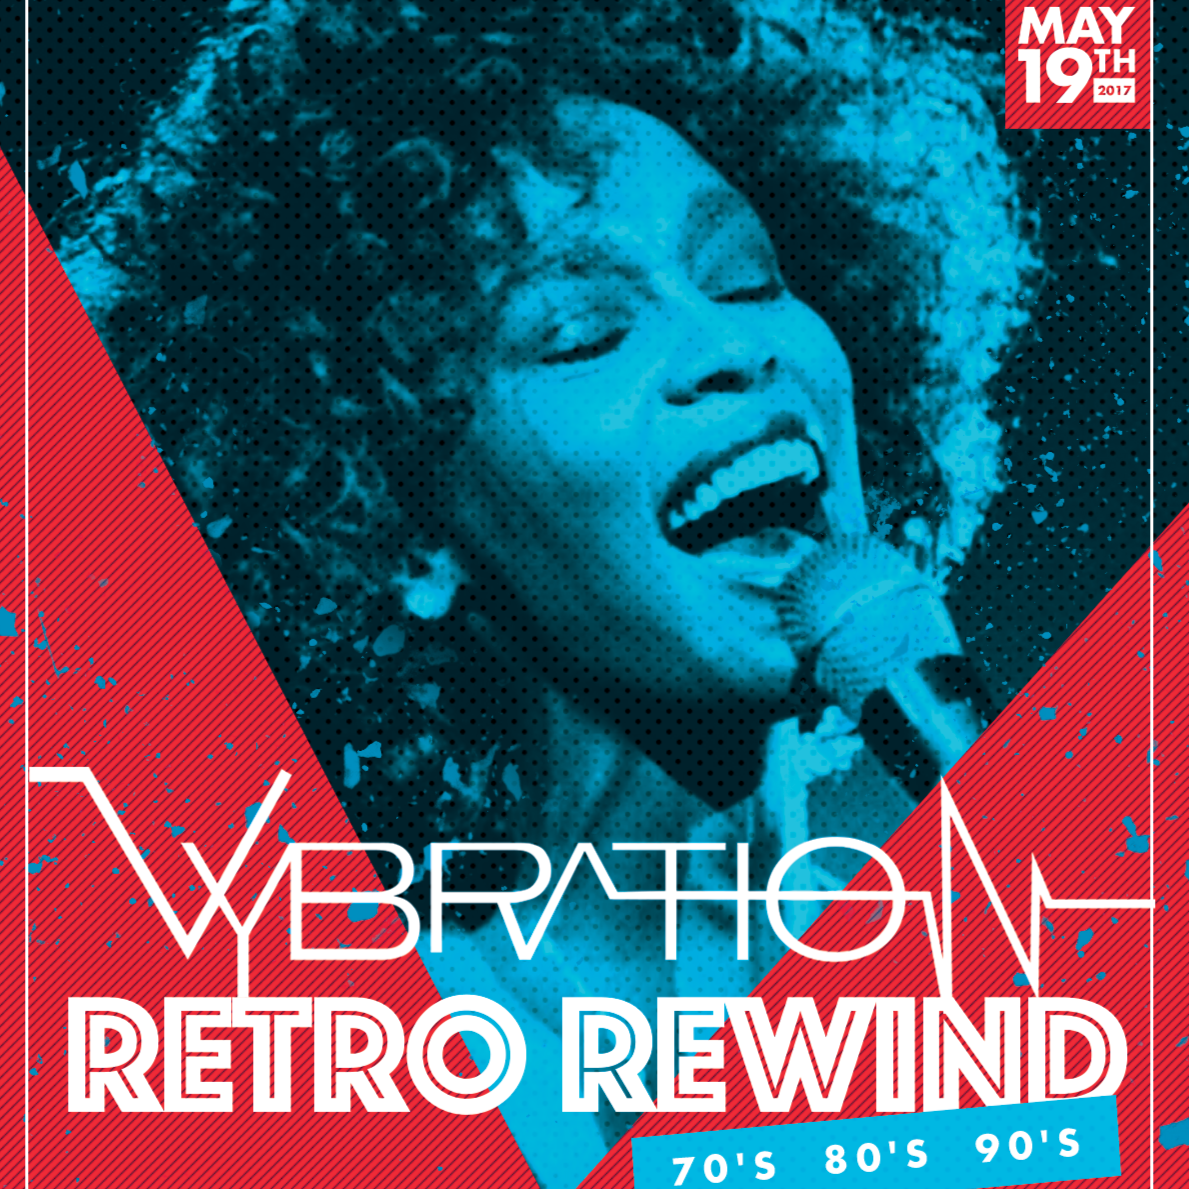 VYBration Retro Rewind Edition